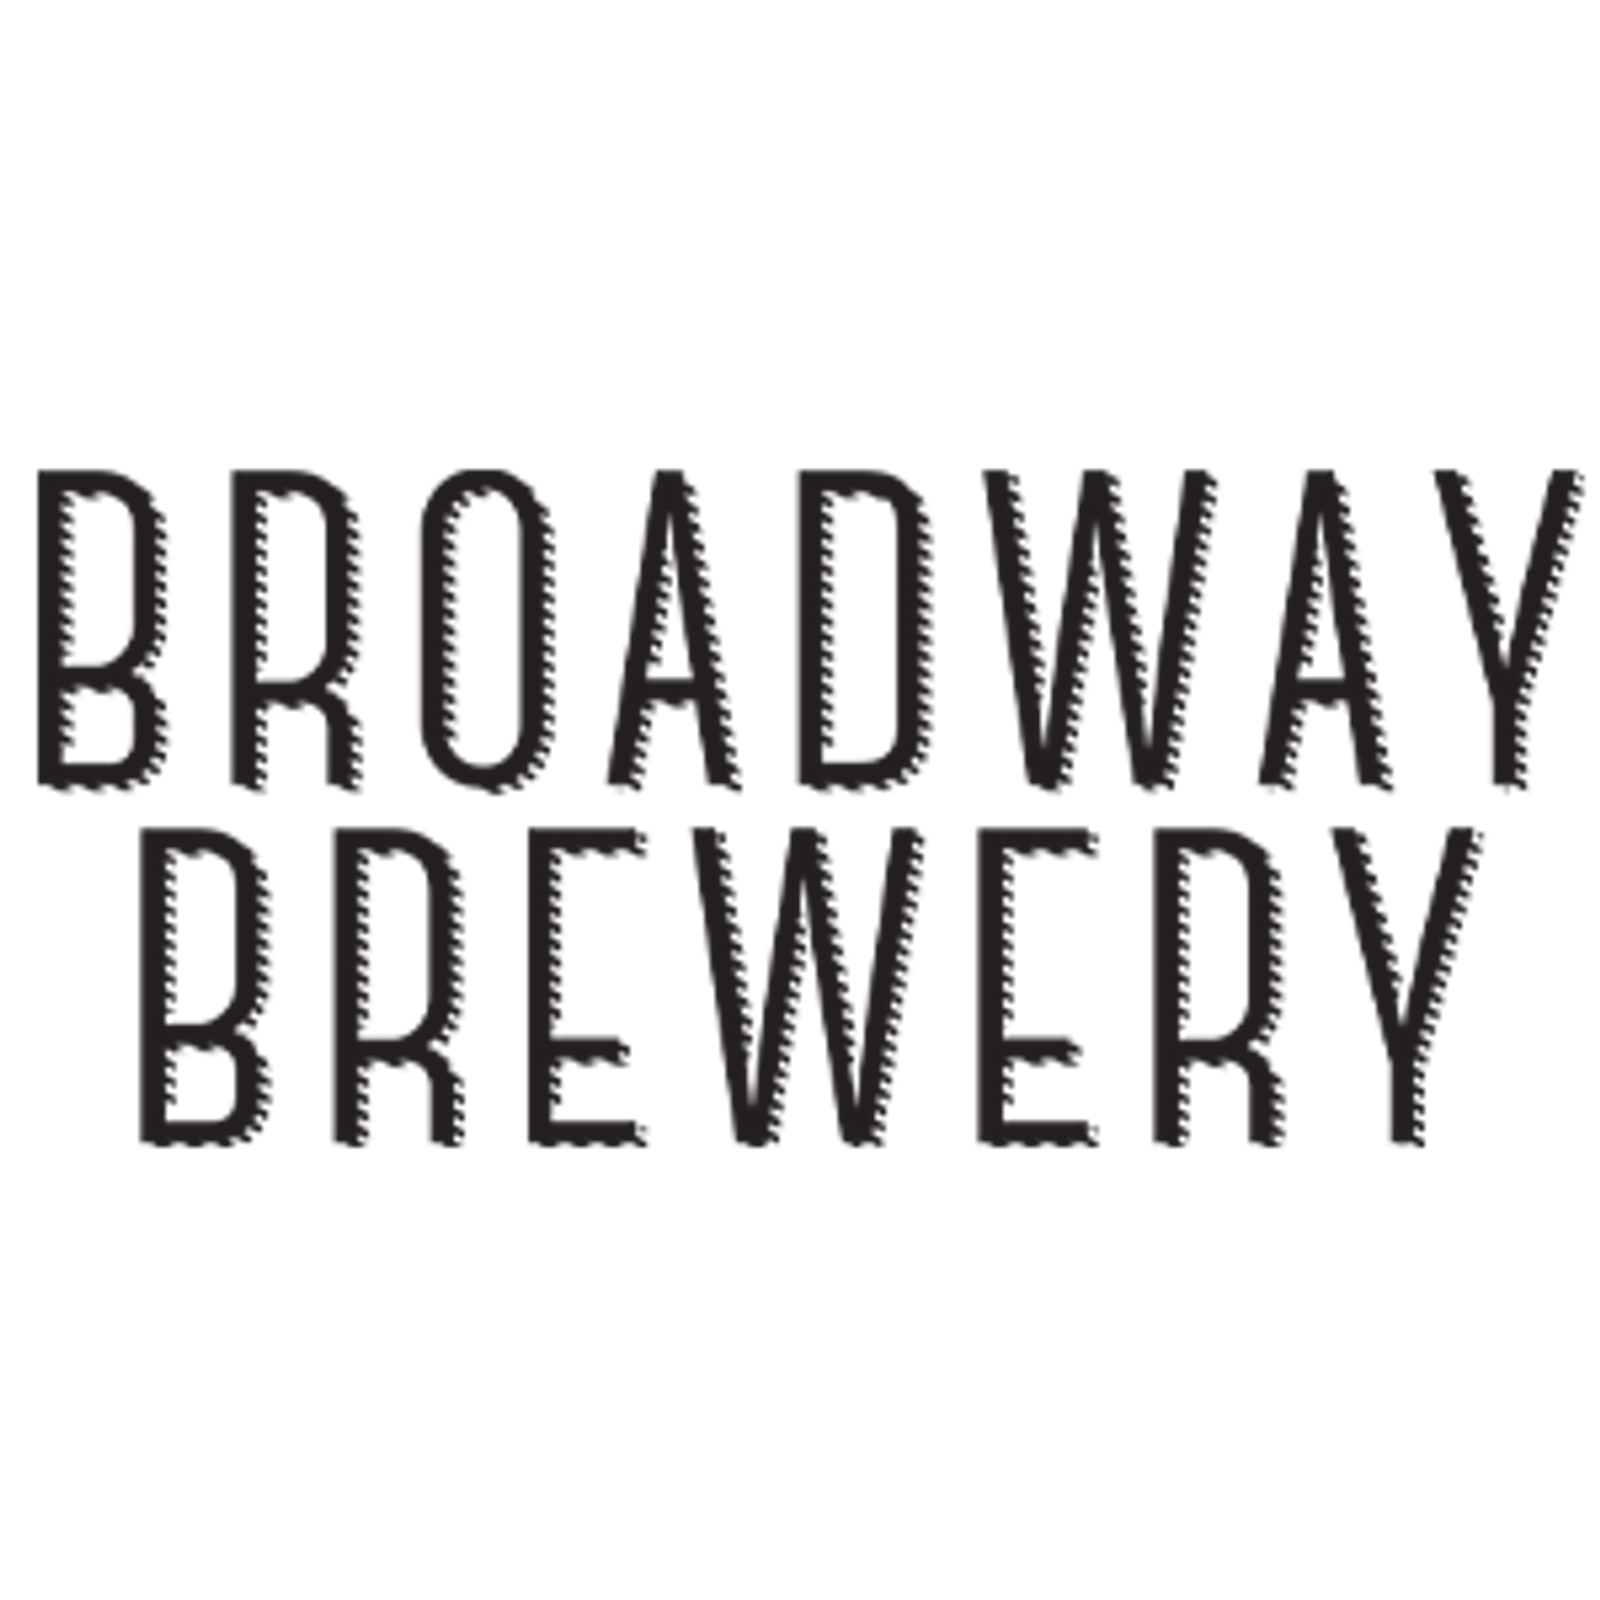 Broadway Brewery